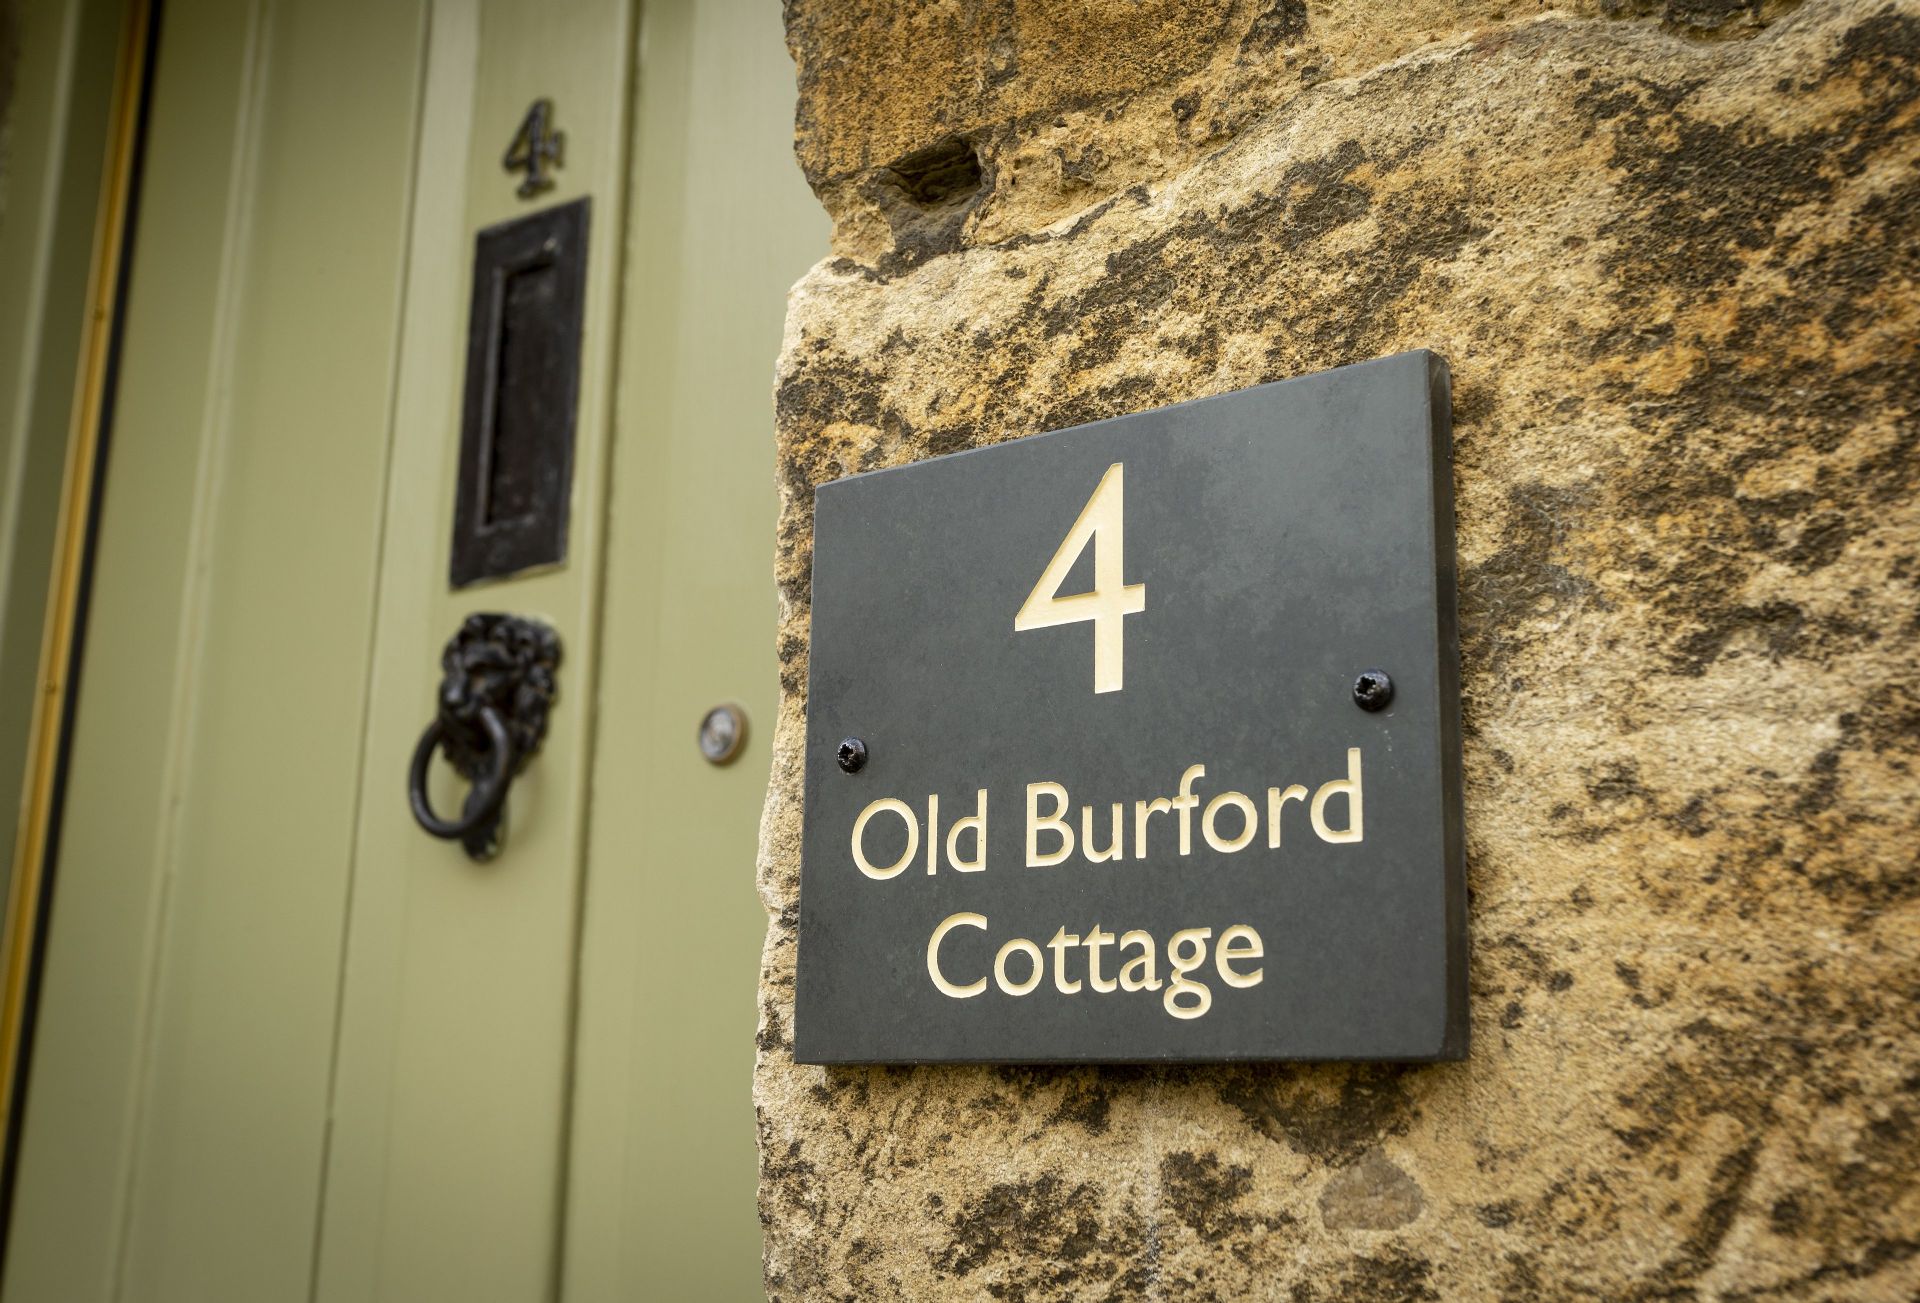 Old Burford Cottage sleeps 4